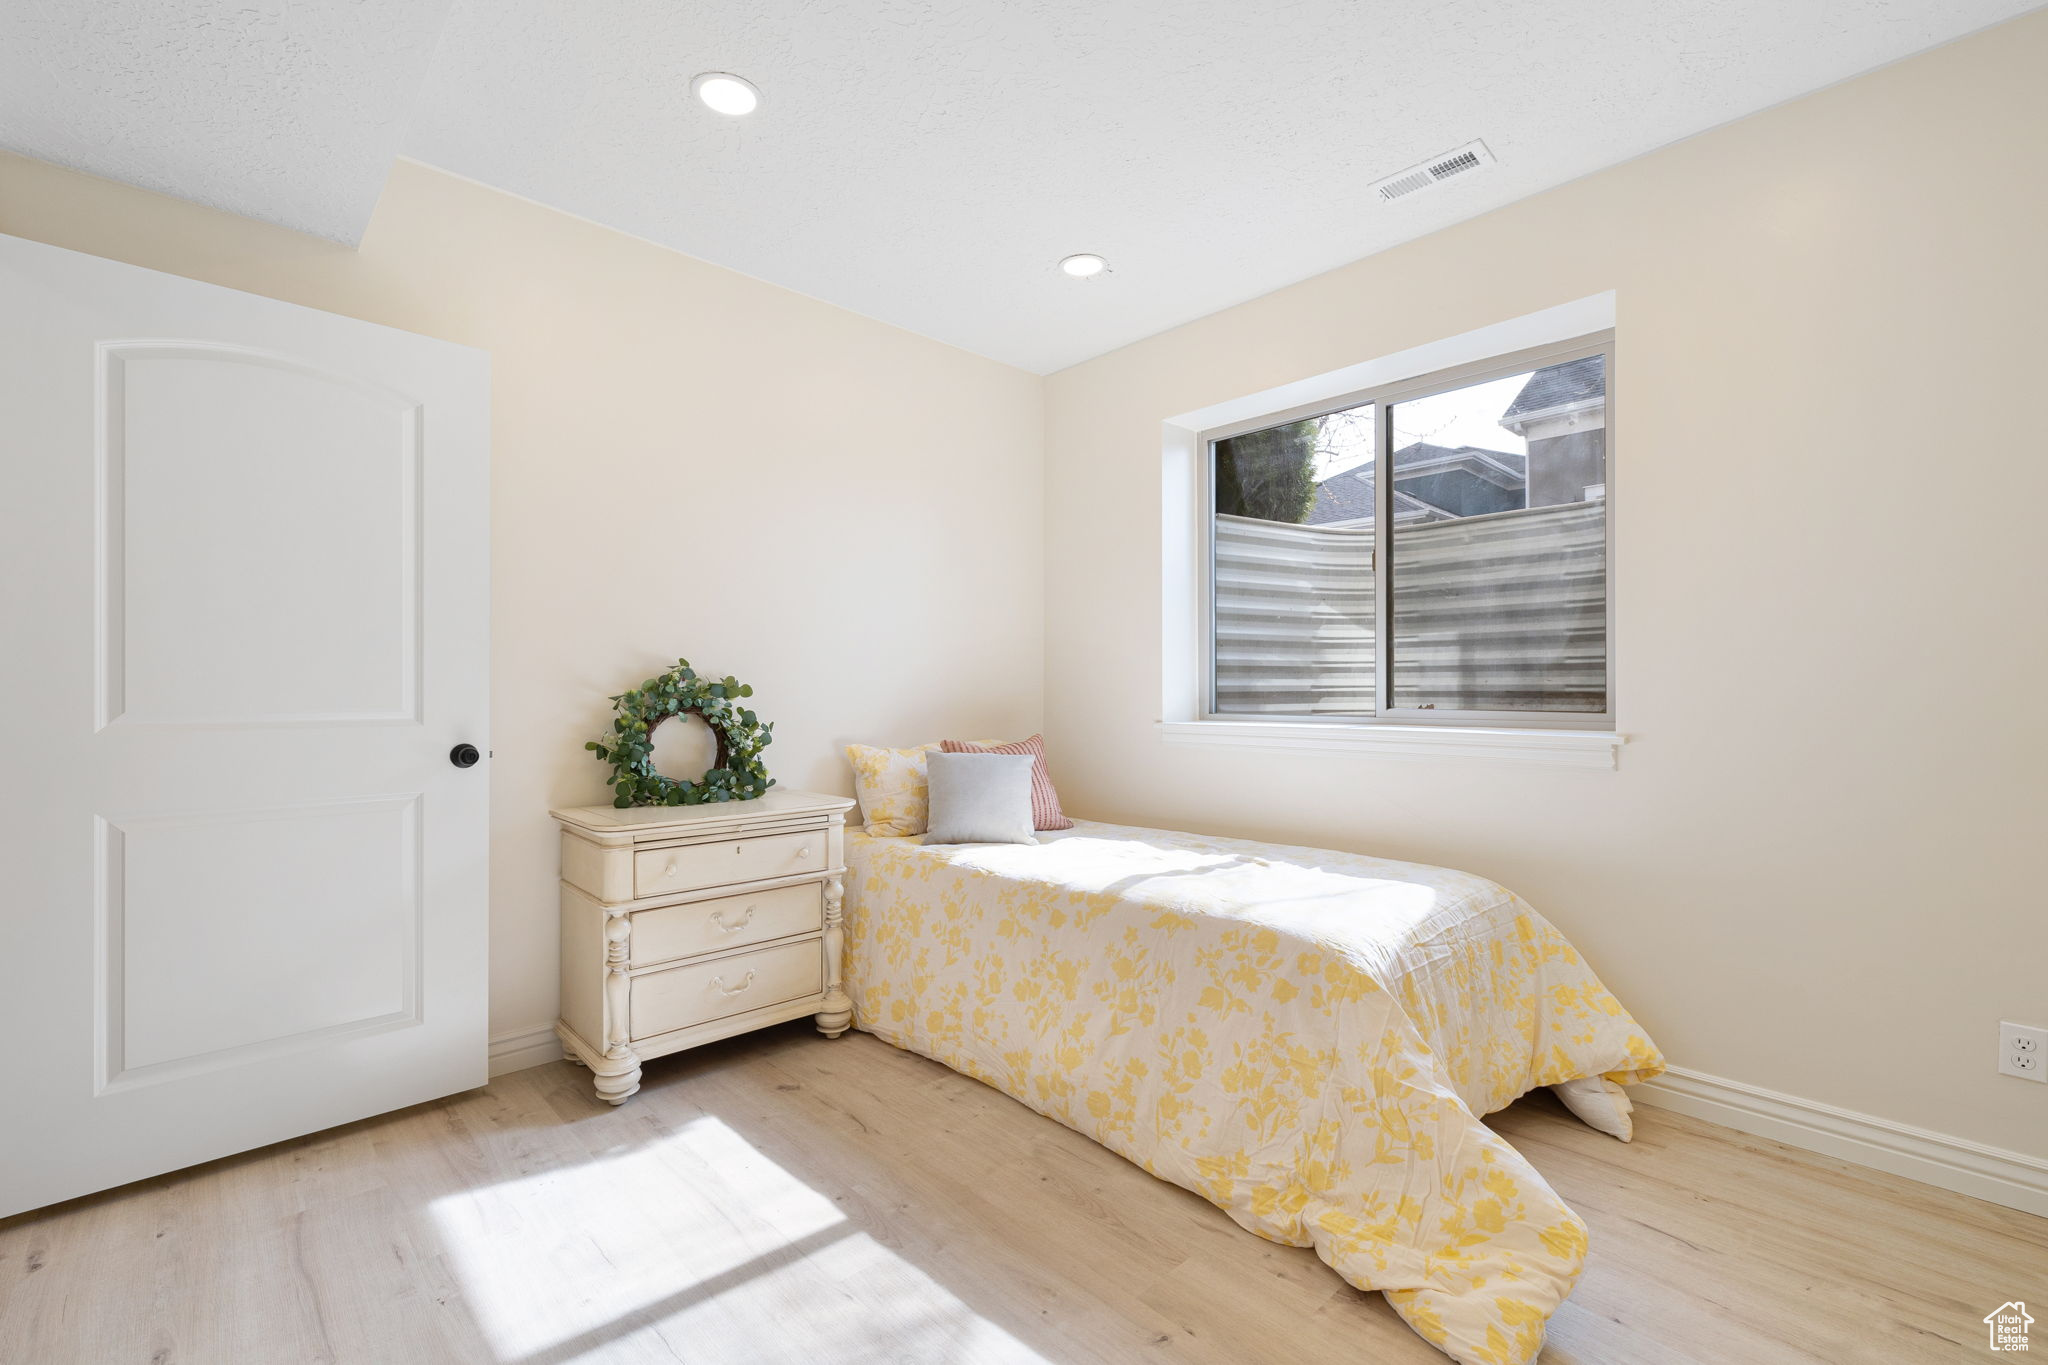 1 of 2 basement apatment / flex area - Bedroom featuring light hardwood / wood-style floors